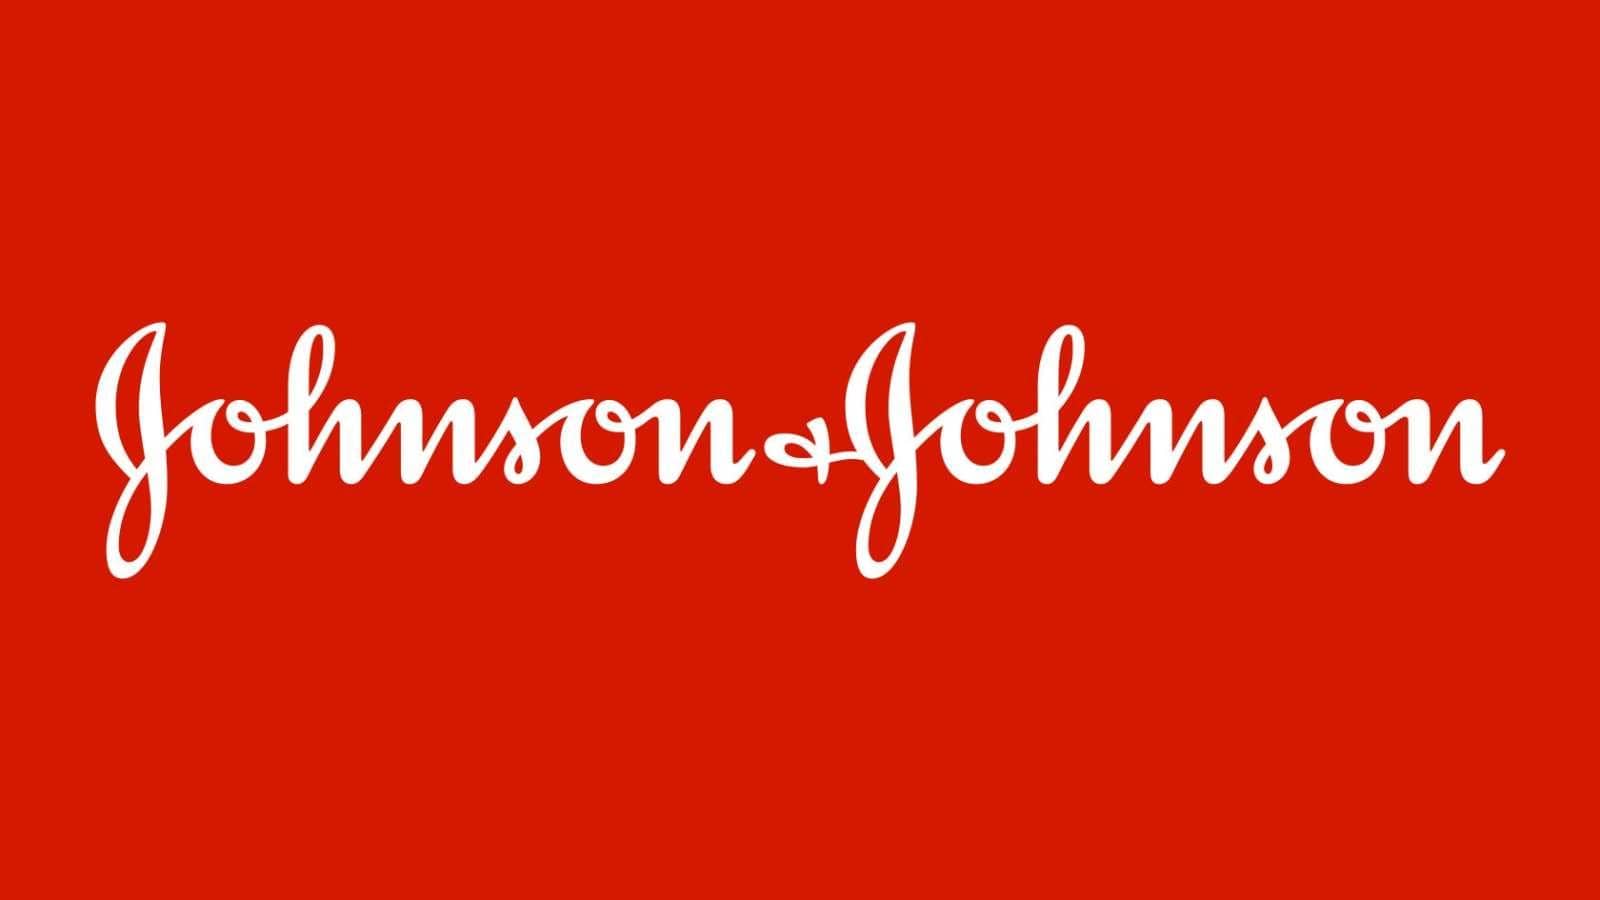 Чистая прибыль Johnson & Johnson выросла